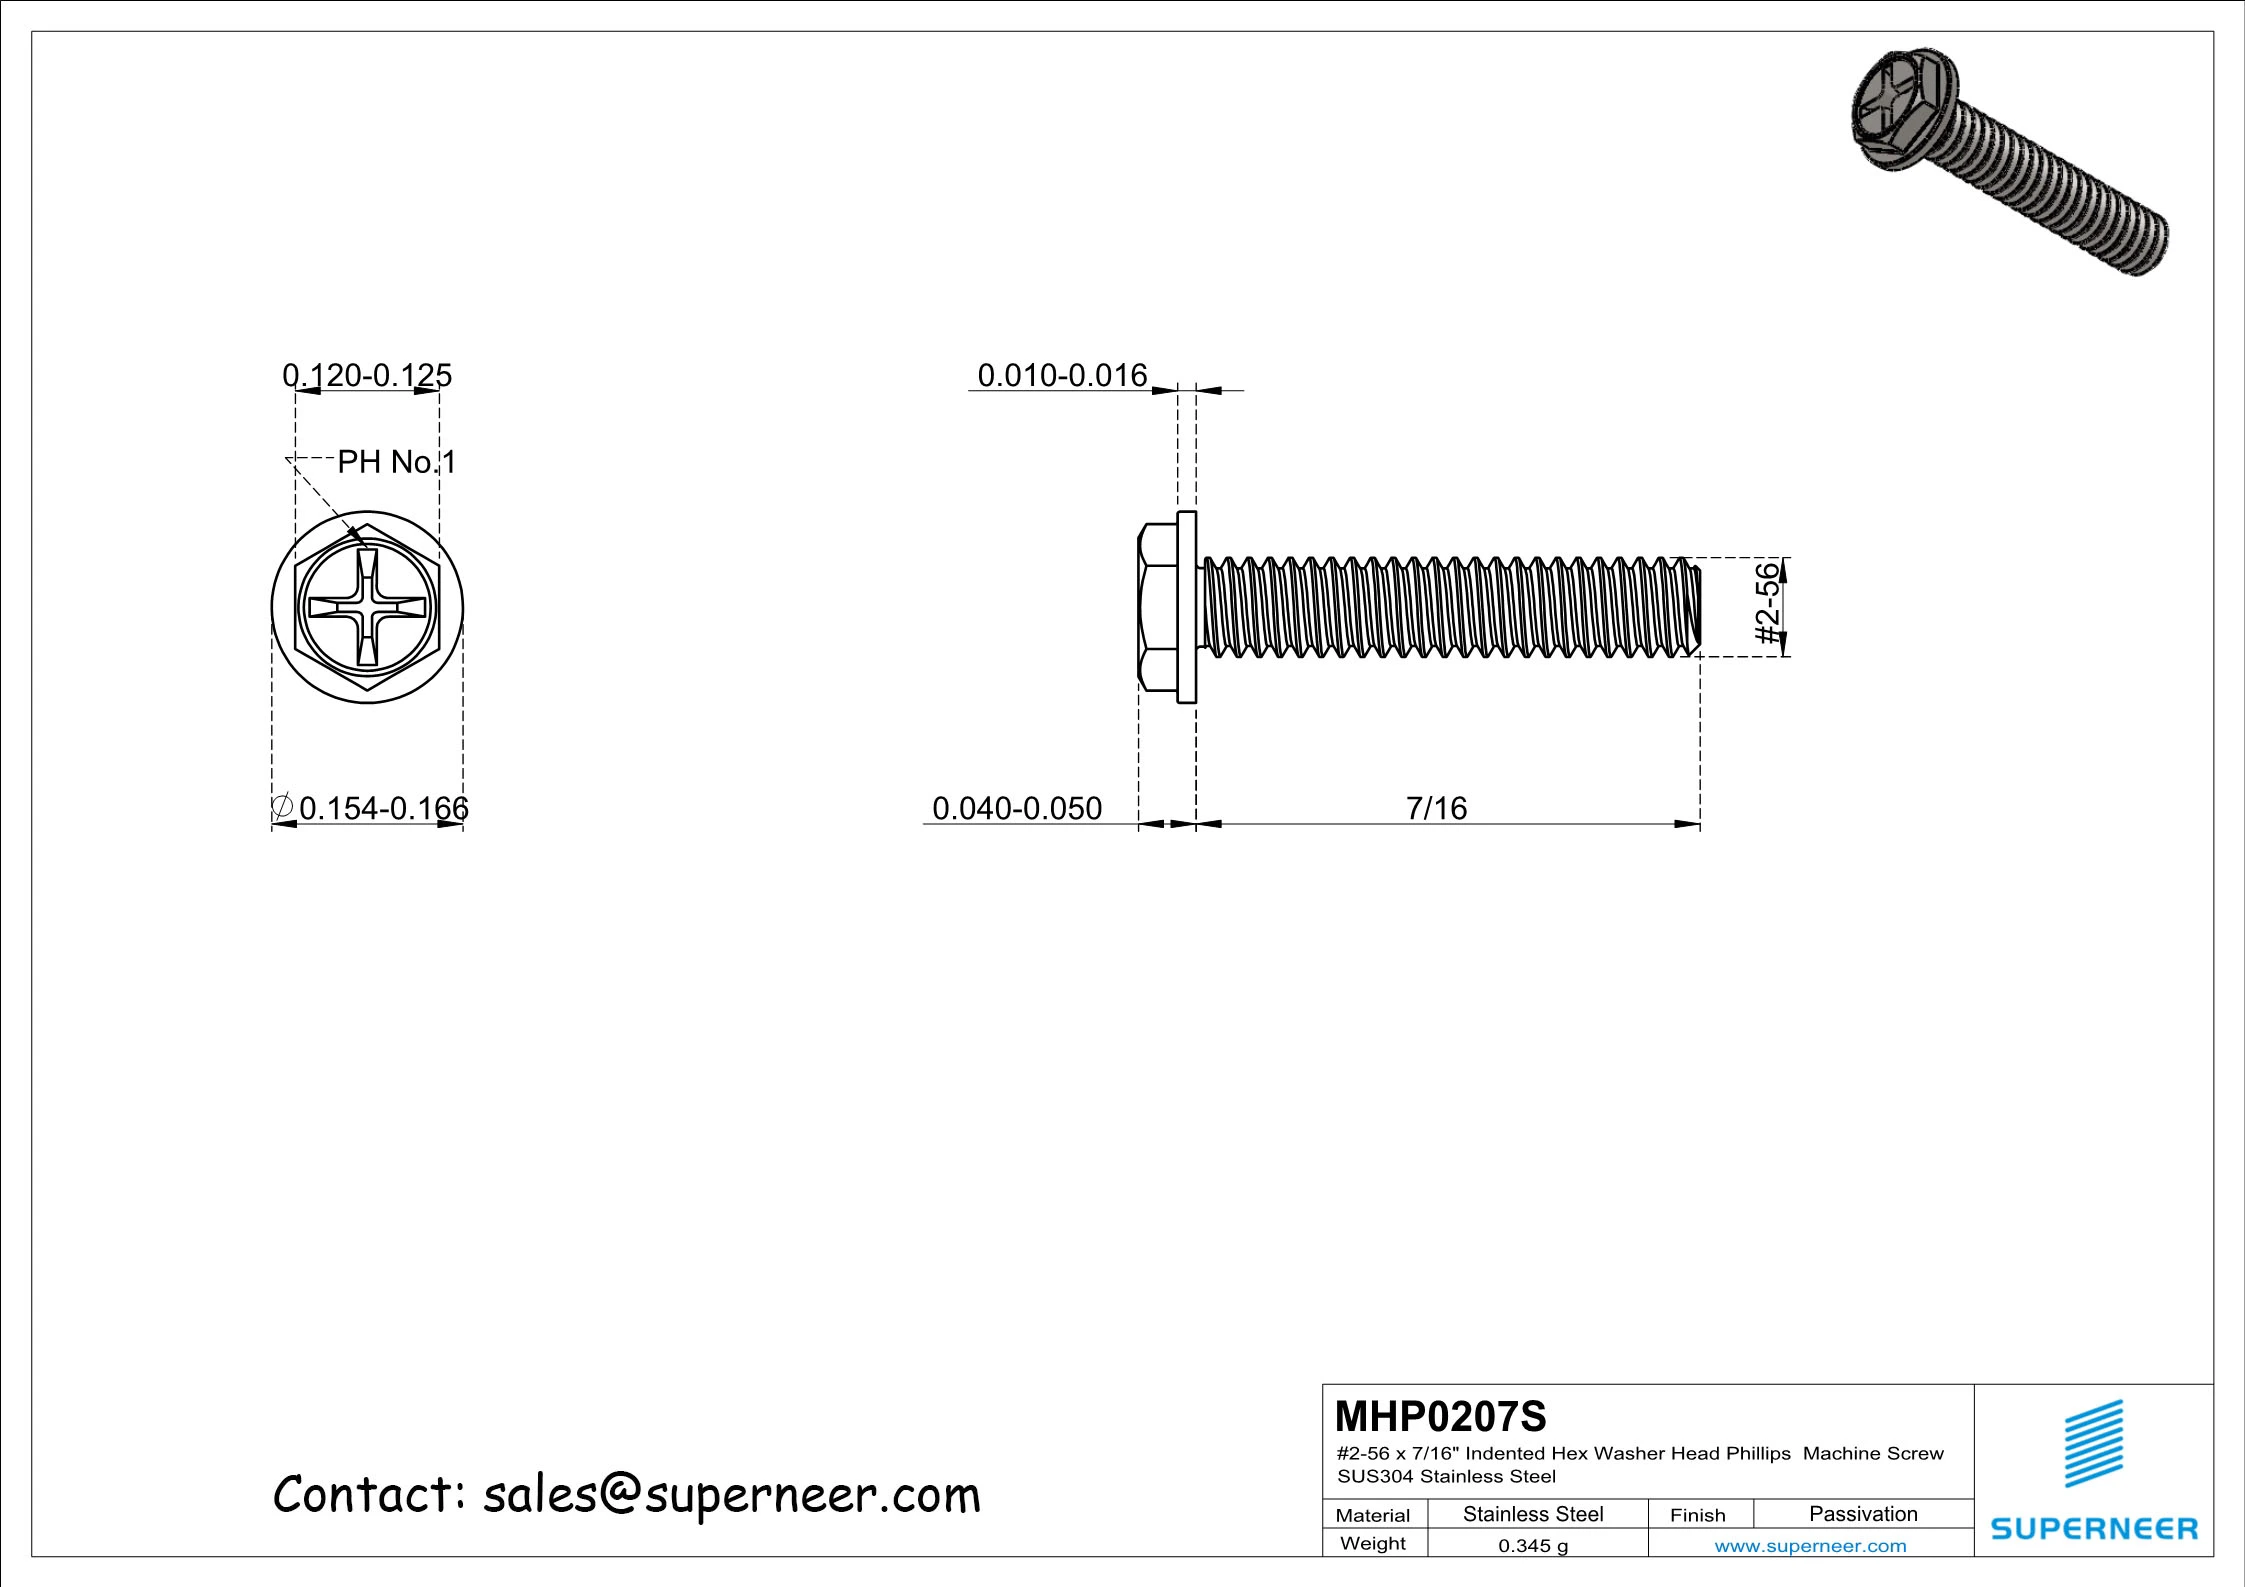 2-56 x 7/16“ Indented Hex Washer Head Phillips Machine Screw SUS304 Stainless Steel Inox